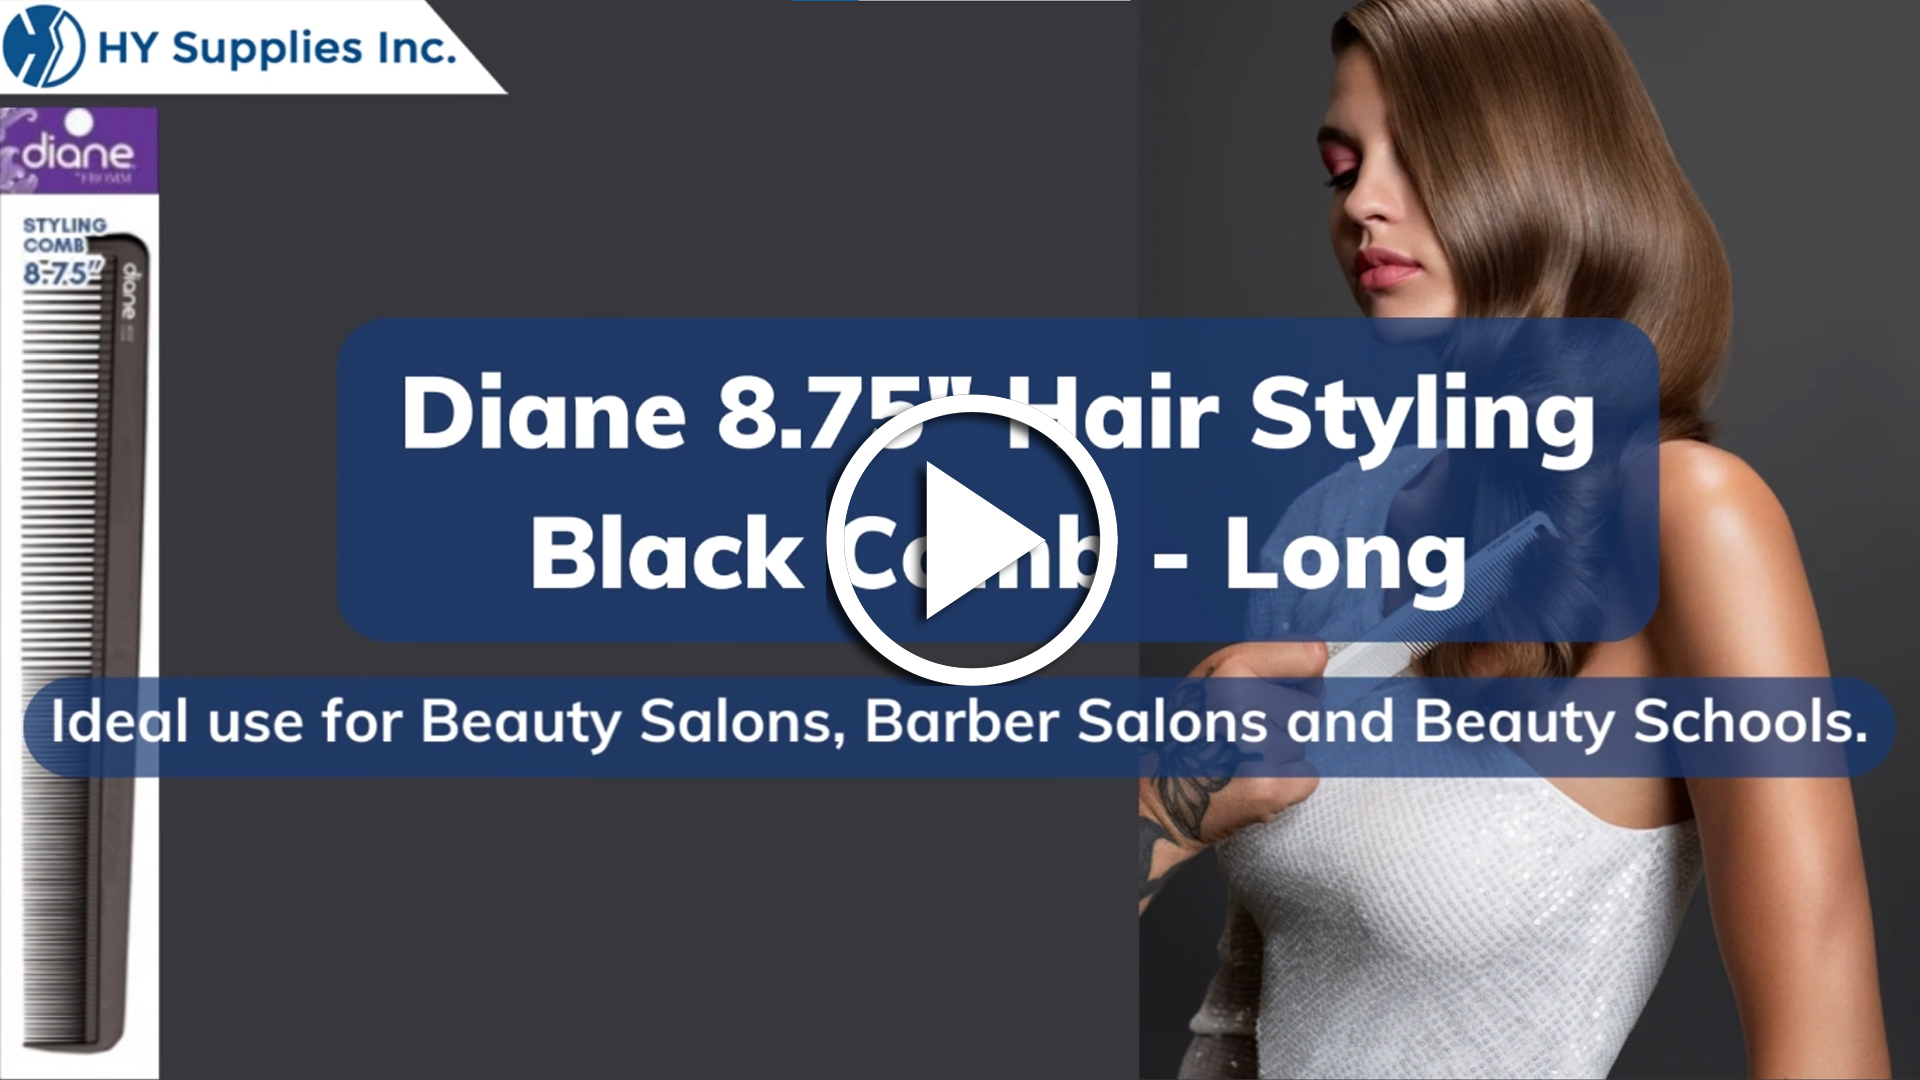 Diane 8.75" Hair Styling Black Comb - Long